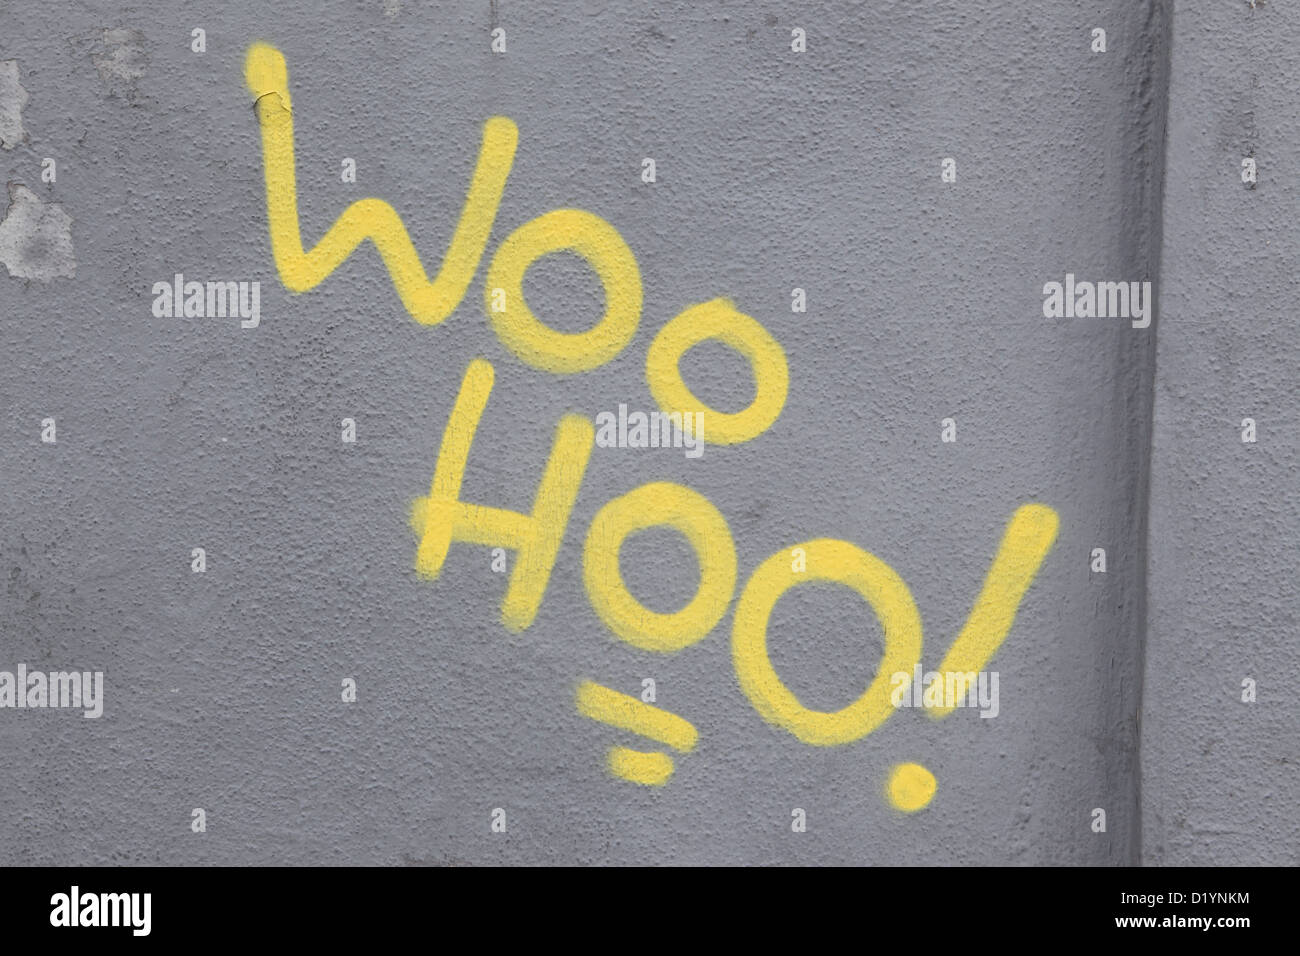 Graffiti on gray wall, 'Woo Hoo!' exclamation joy joyous fun, Puerto de la Cruz, Tenerife, Canary Islands. Stock Photo